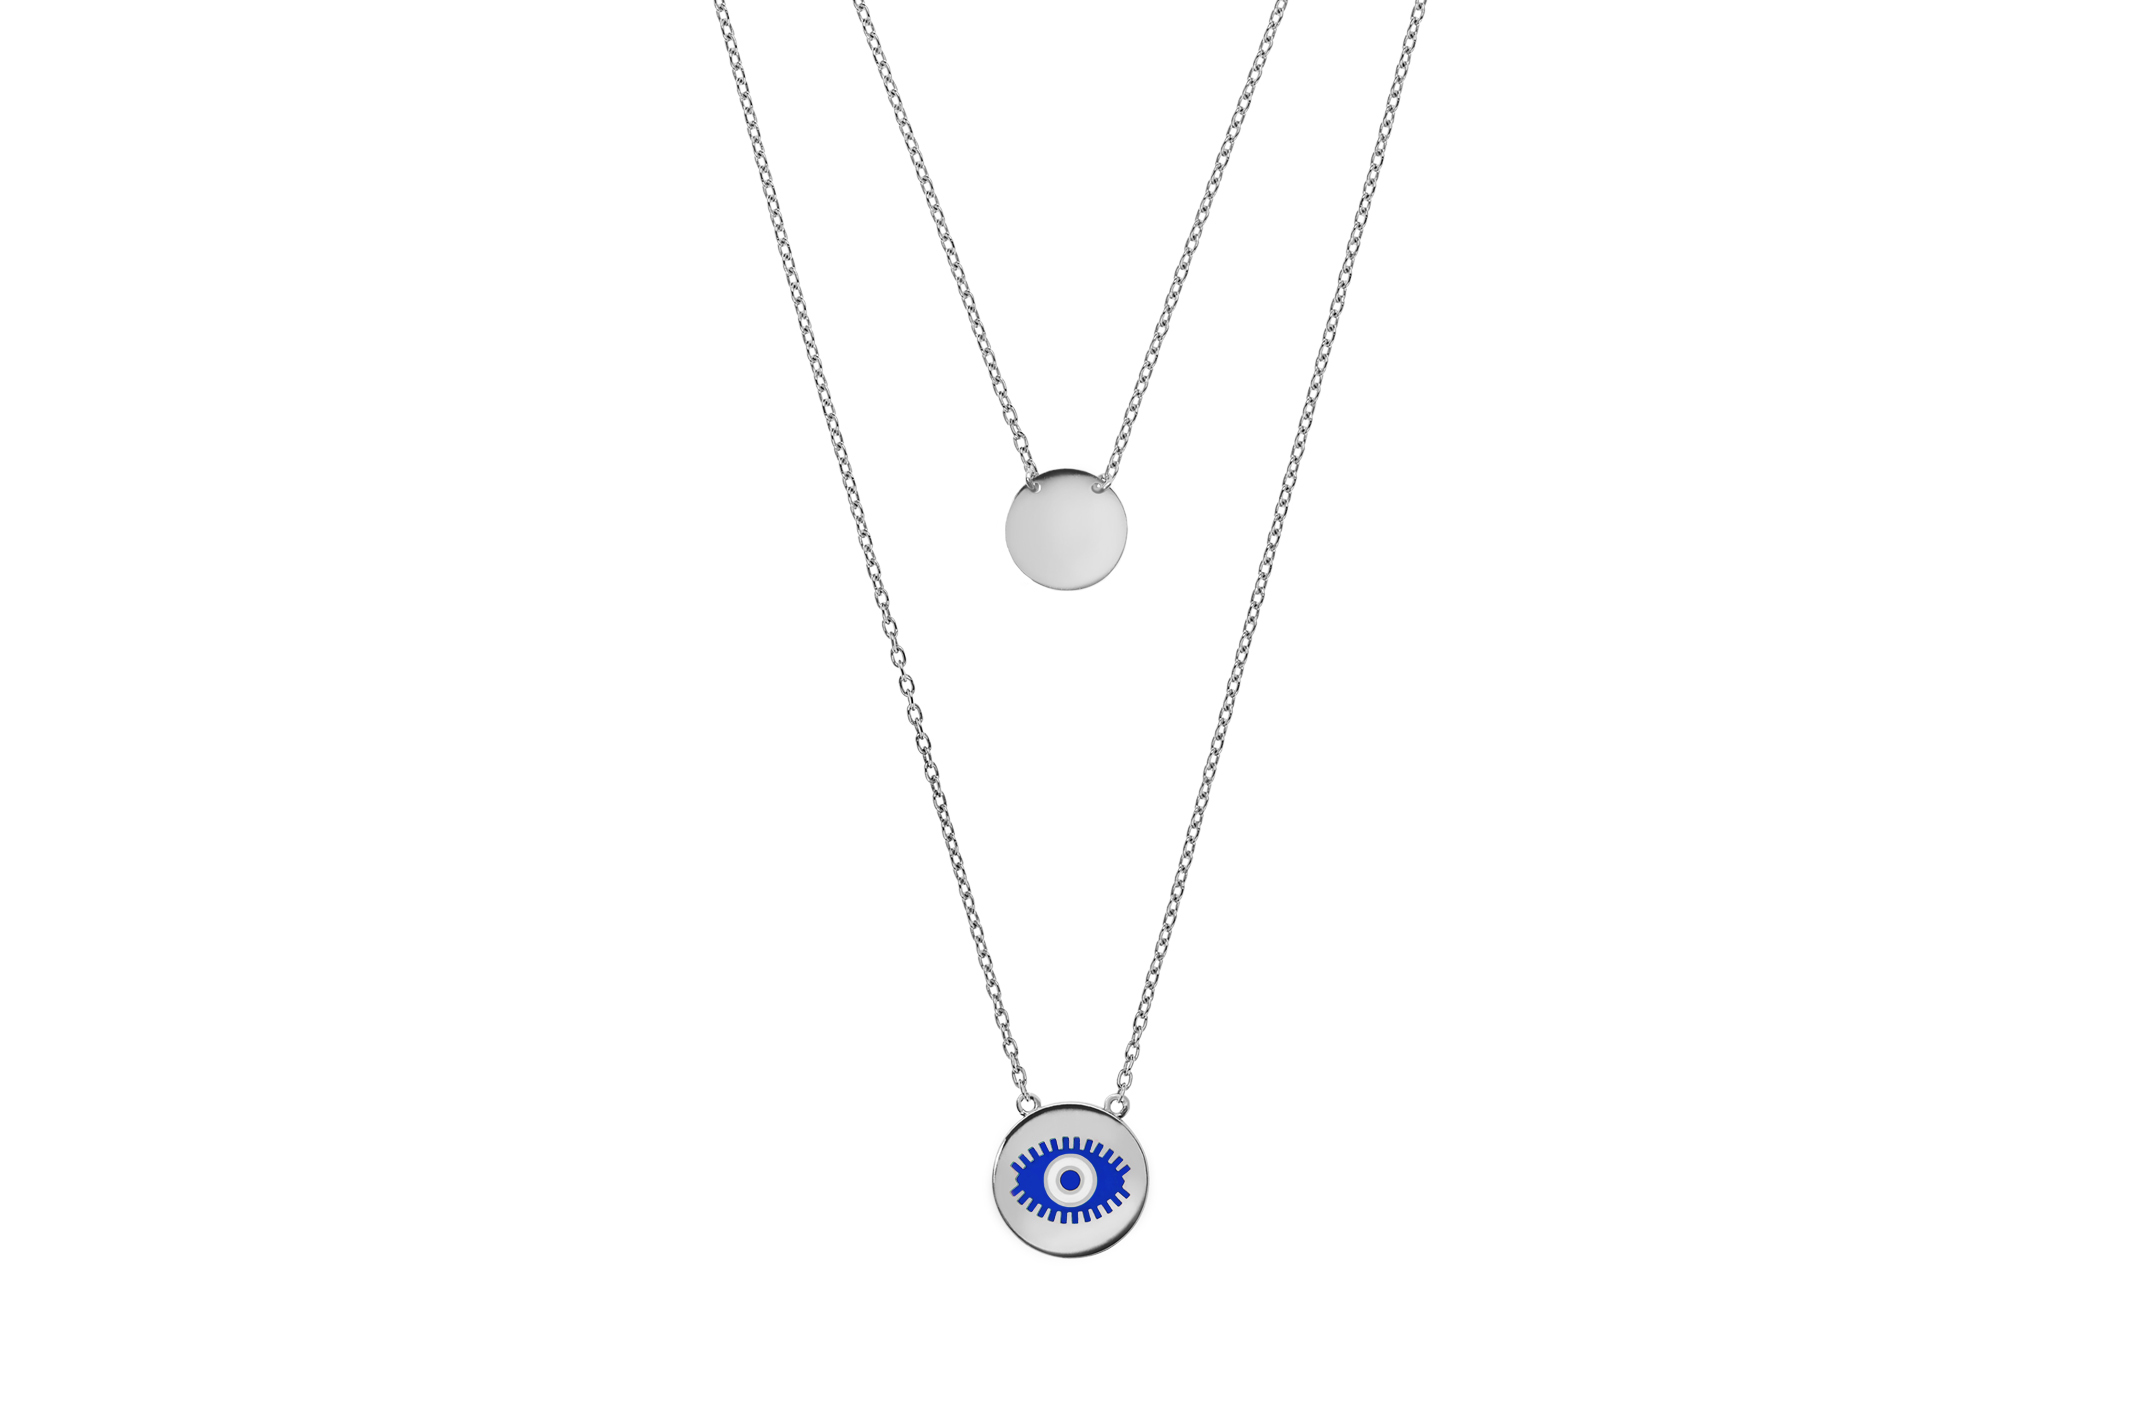 Joia: colar;Material: prata 925;Peso: 4.0 gr;Cor: branco;Medida: 60 cm;Género: mulher